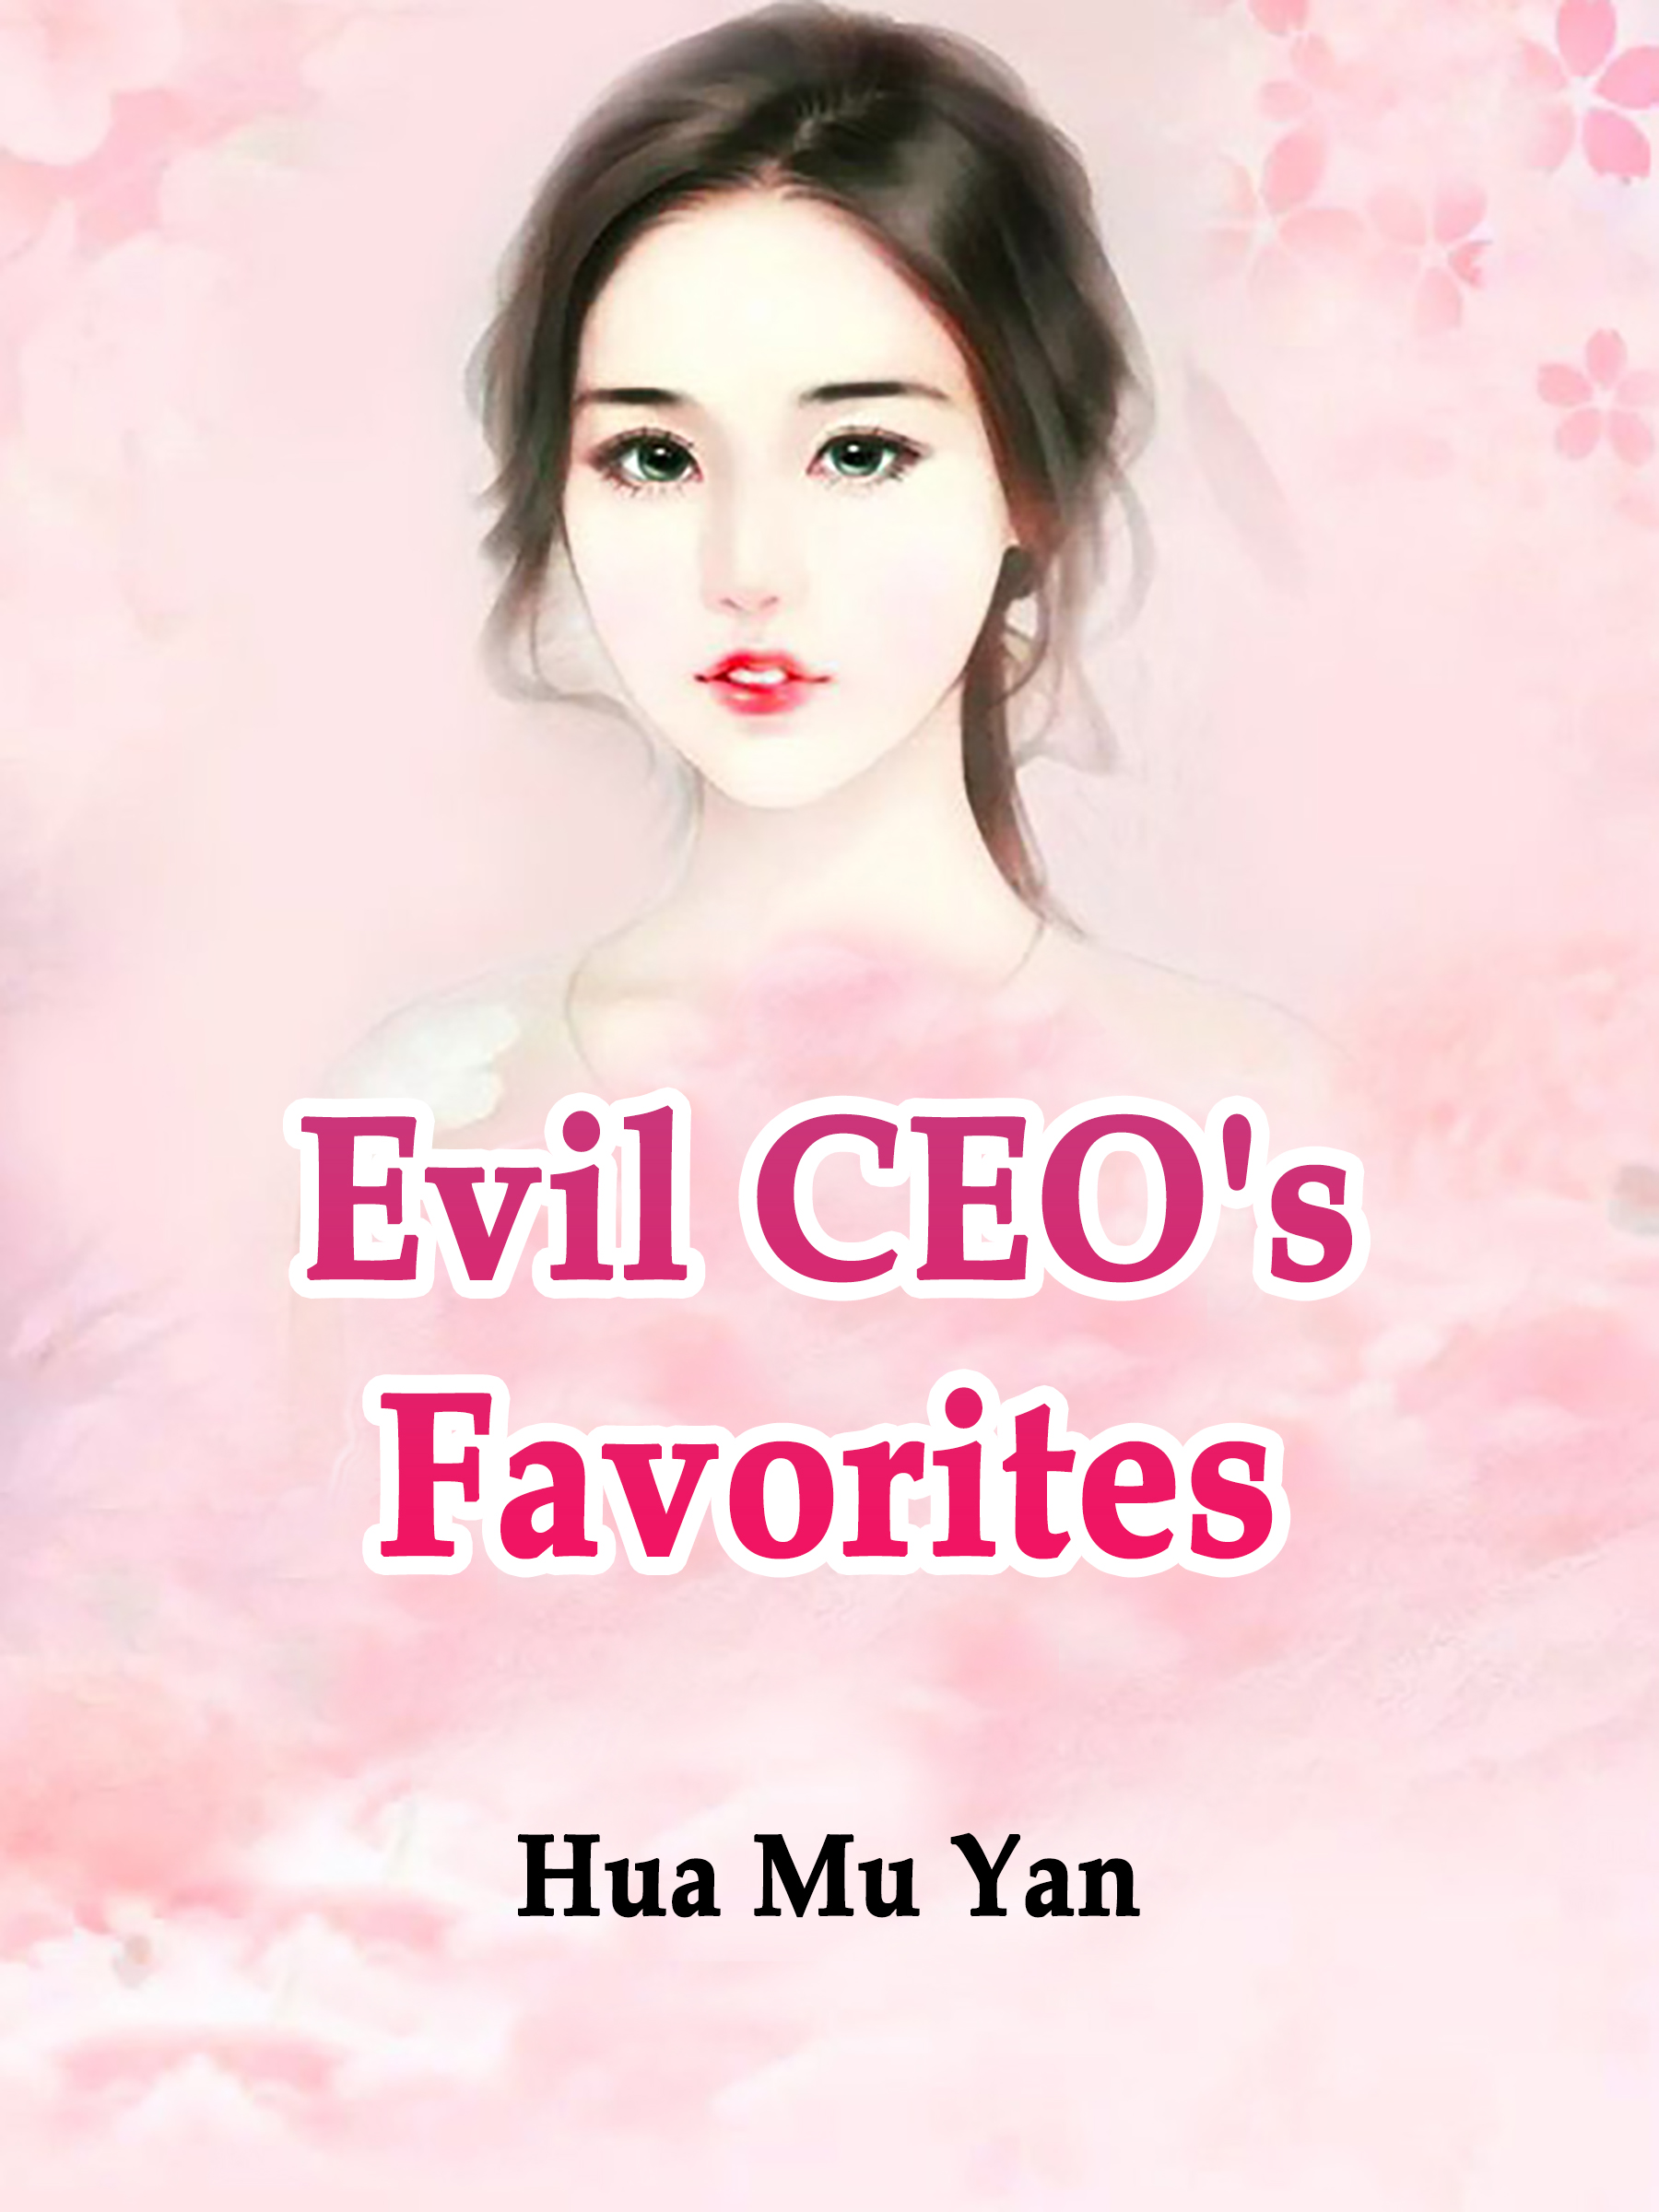 Evil CEO's Favorites